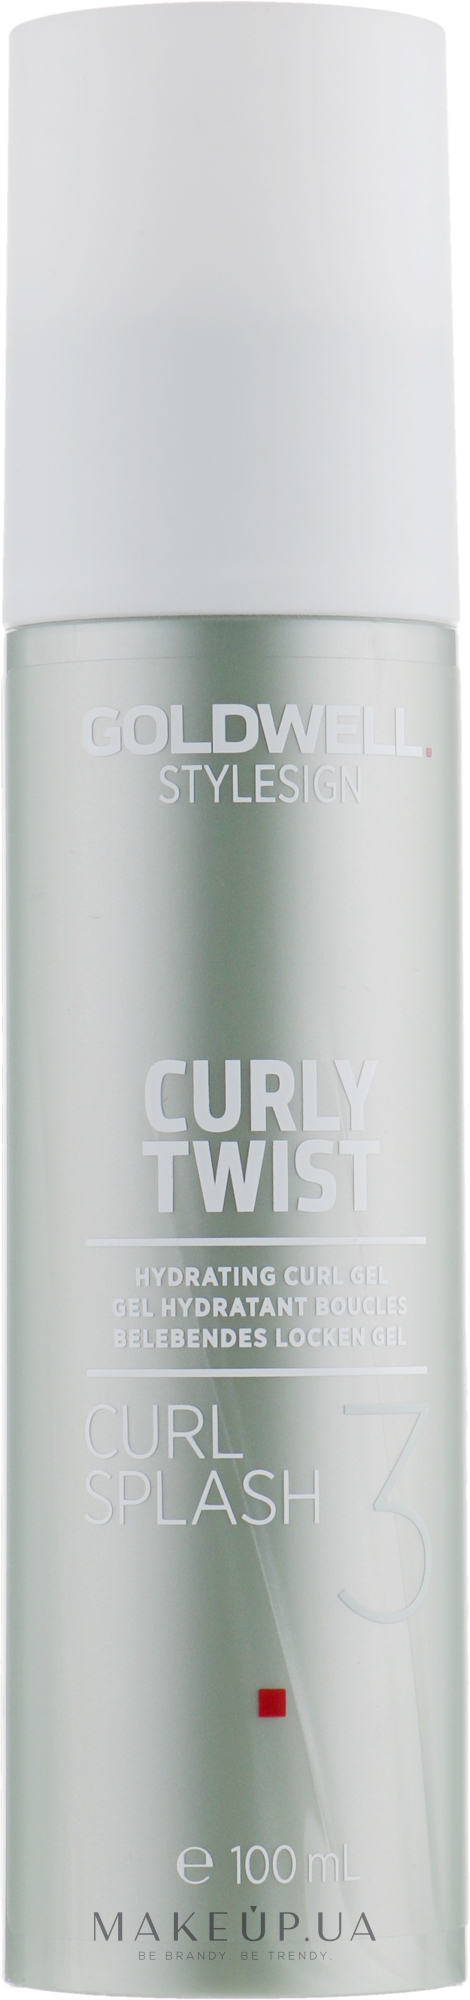 Гидрогель для создания упругих локонов - Goldwell Stylesign Curly Twist Curl Splash Hydrating Curl Gel — фото 100ml